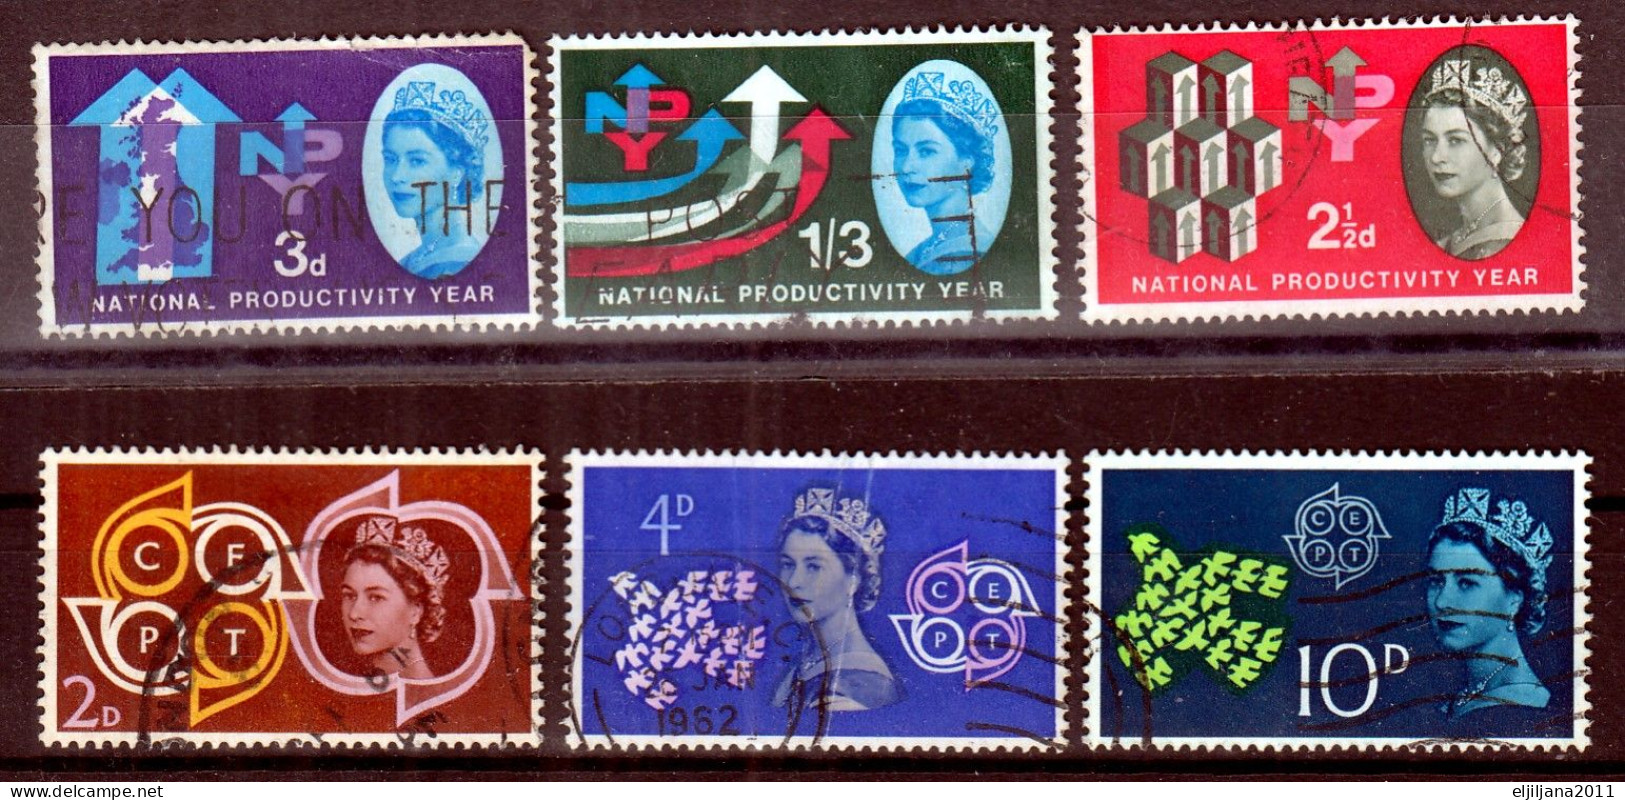 Great Britain - GB / UK / QEII. 1953 - 1963 ⁕ Queen Elizabeth II. ⁕ 22v Used Stamps / Unchecked - Gebraucht